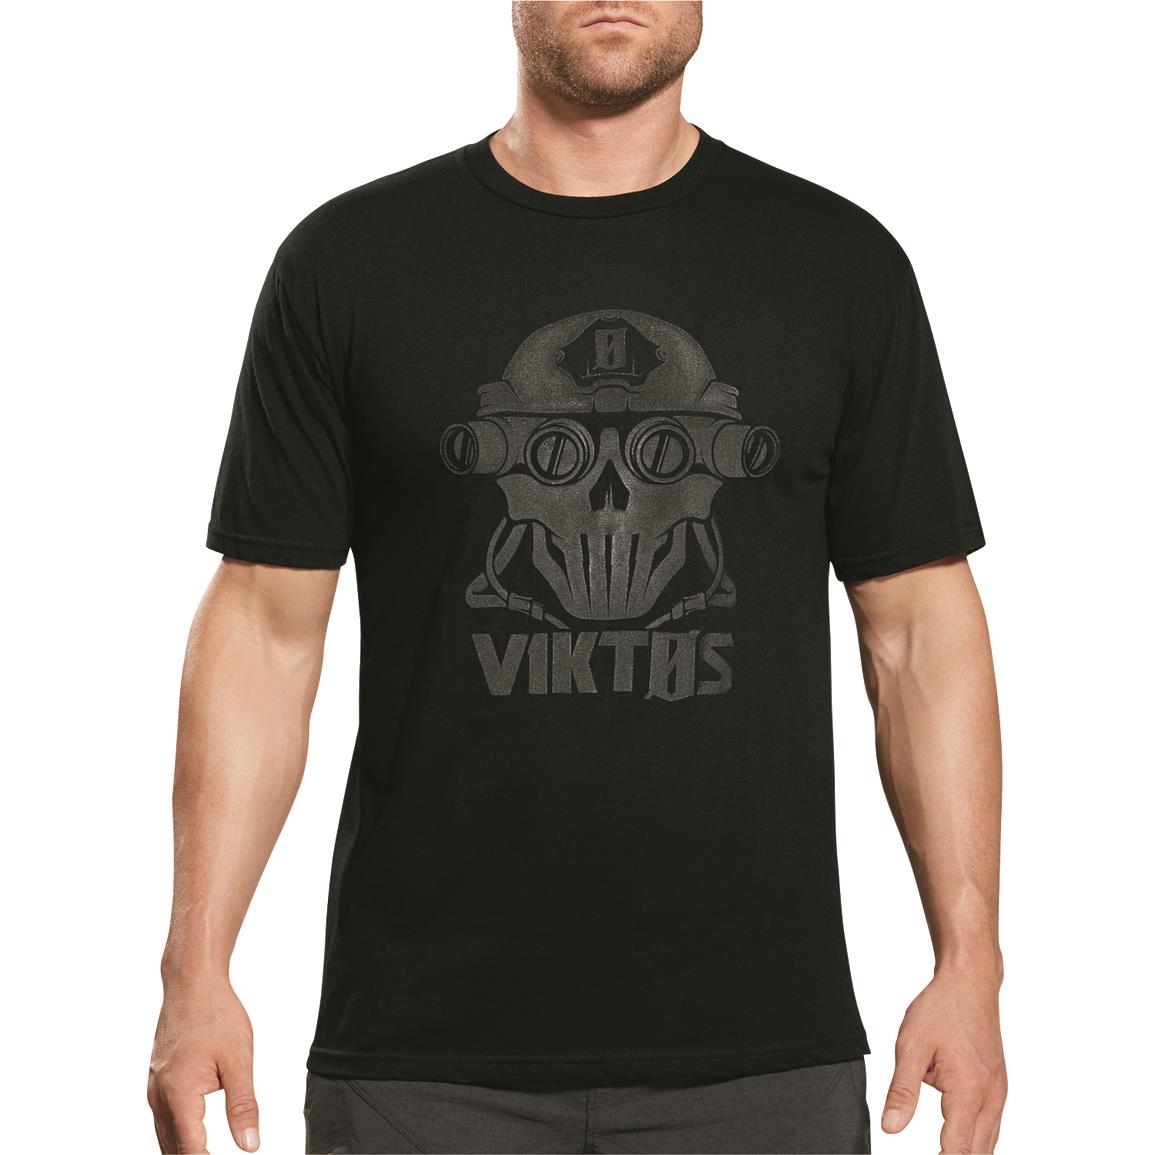 Viktos Men's Four Eyes T-shirt, Black